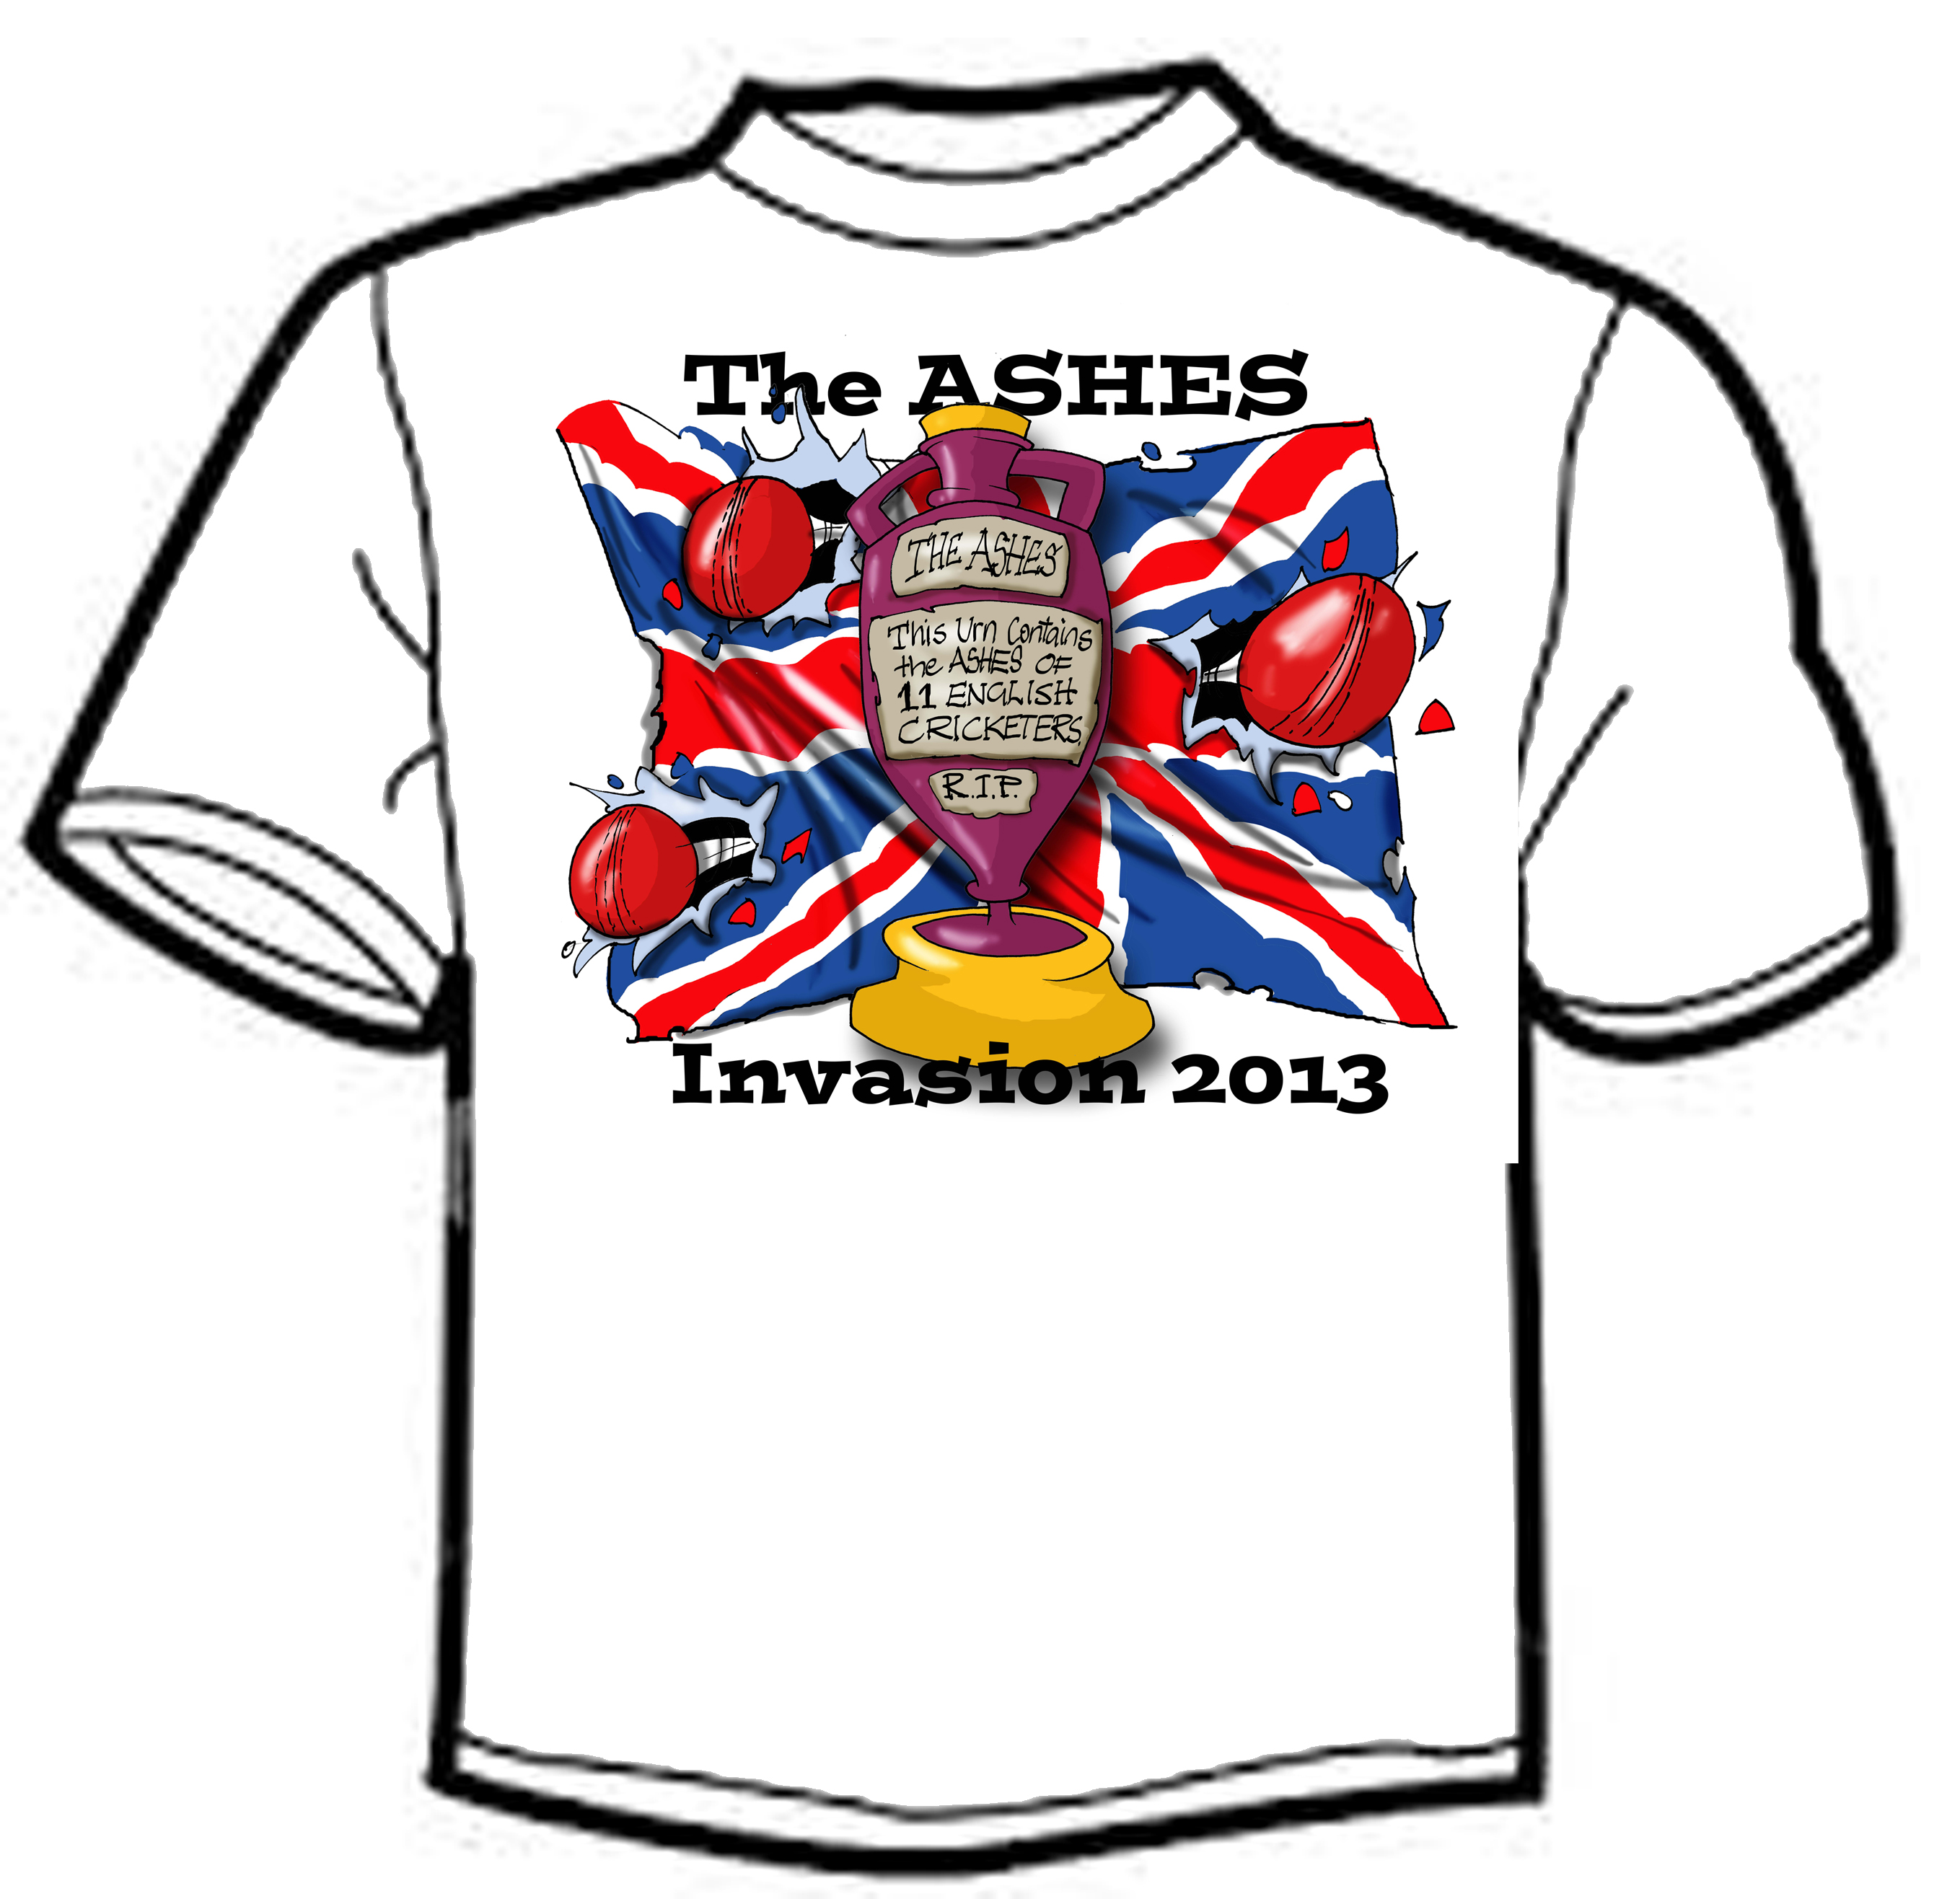 Ashes tee shirt